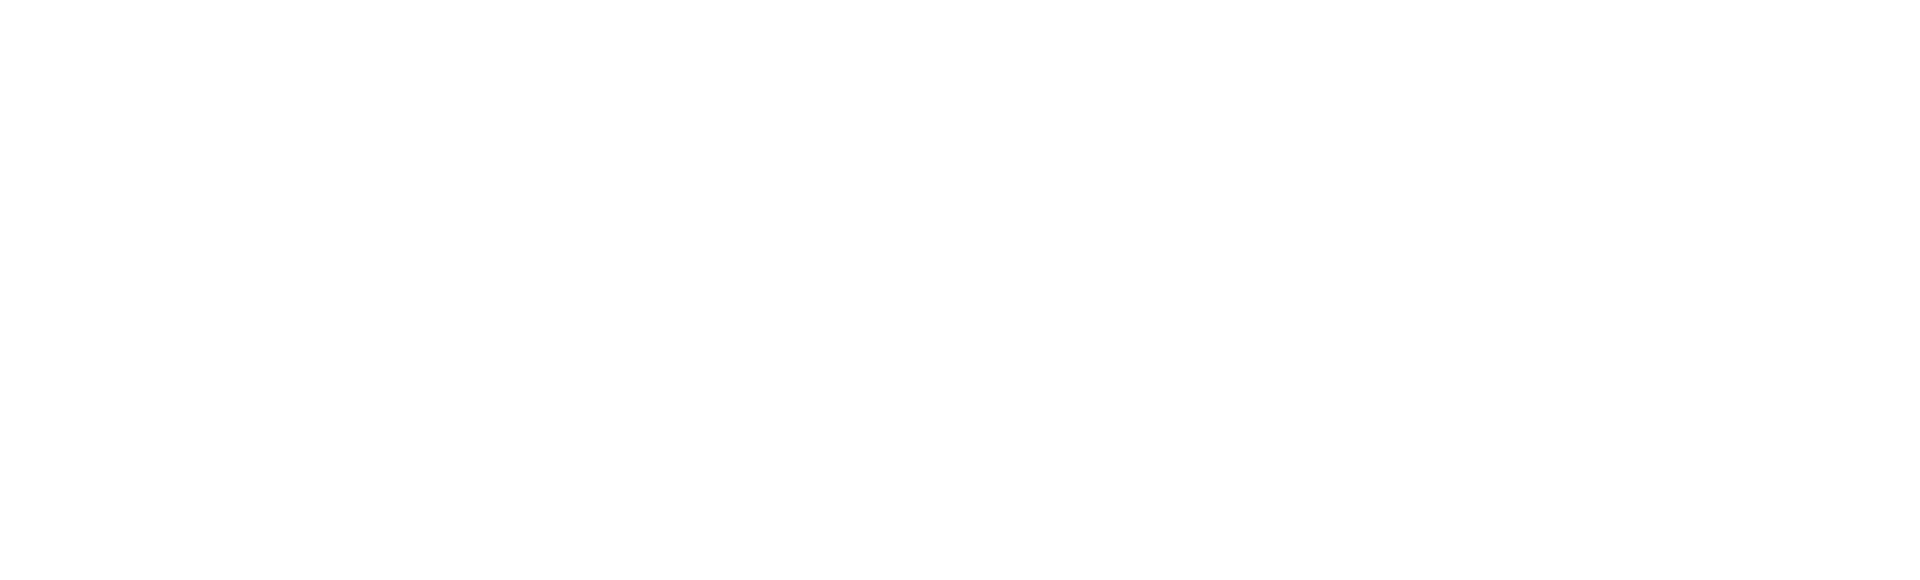 Paul L. Murphy & Sons Funeral Home Logo